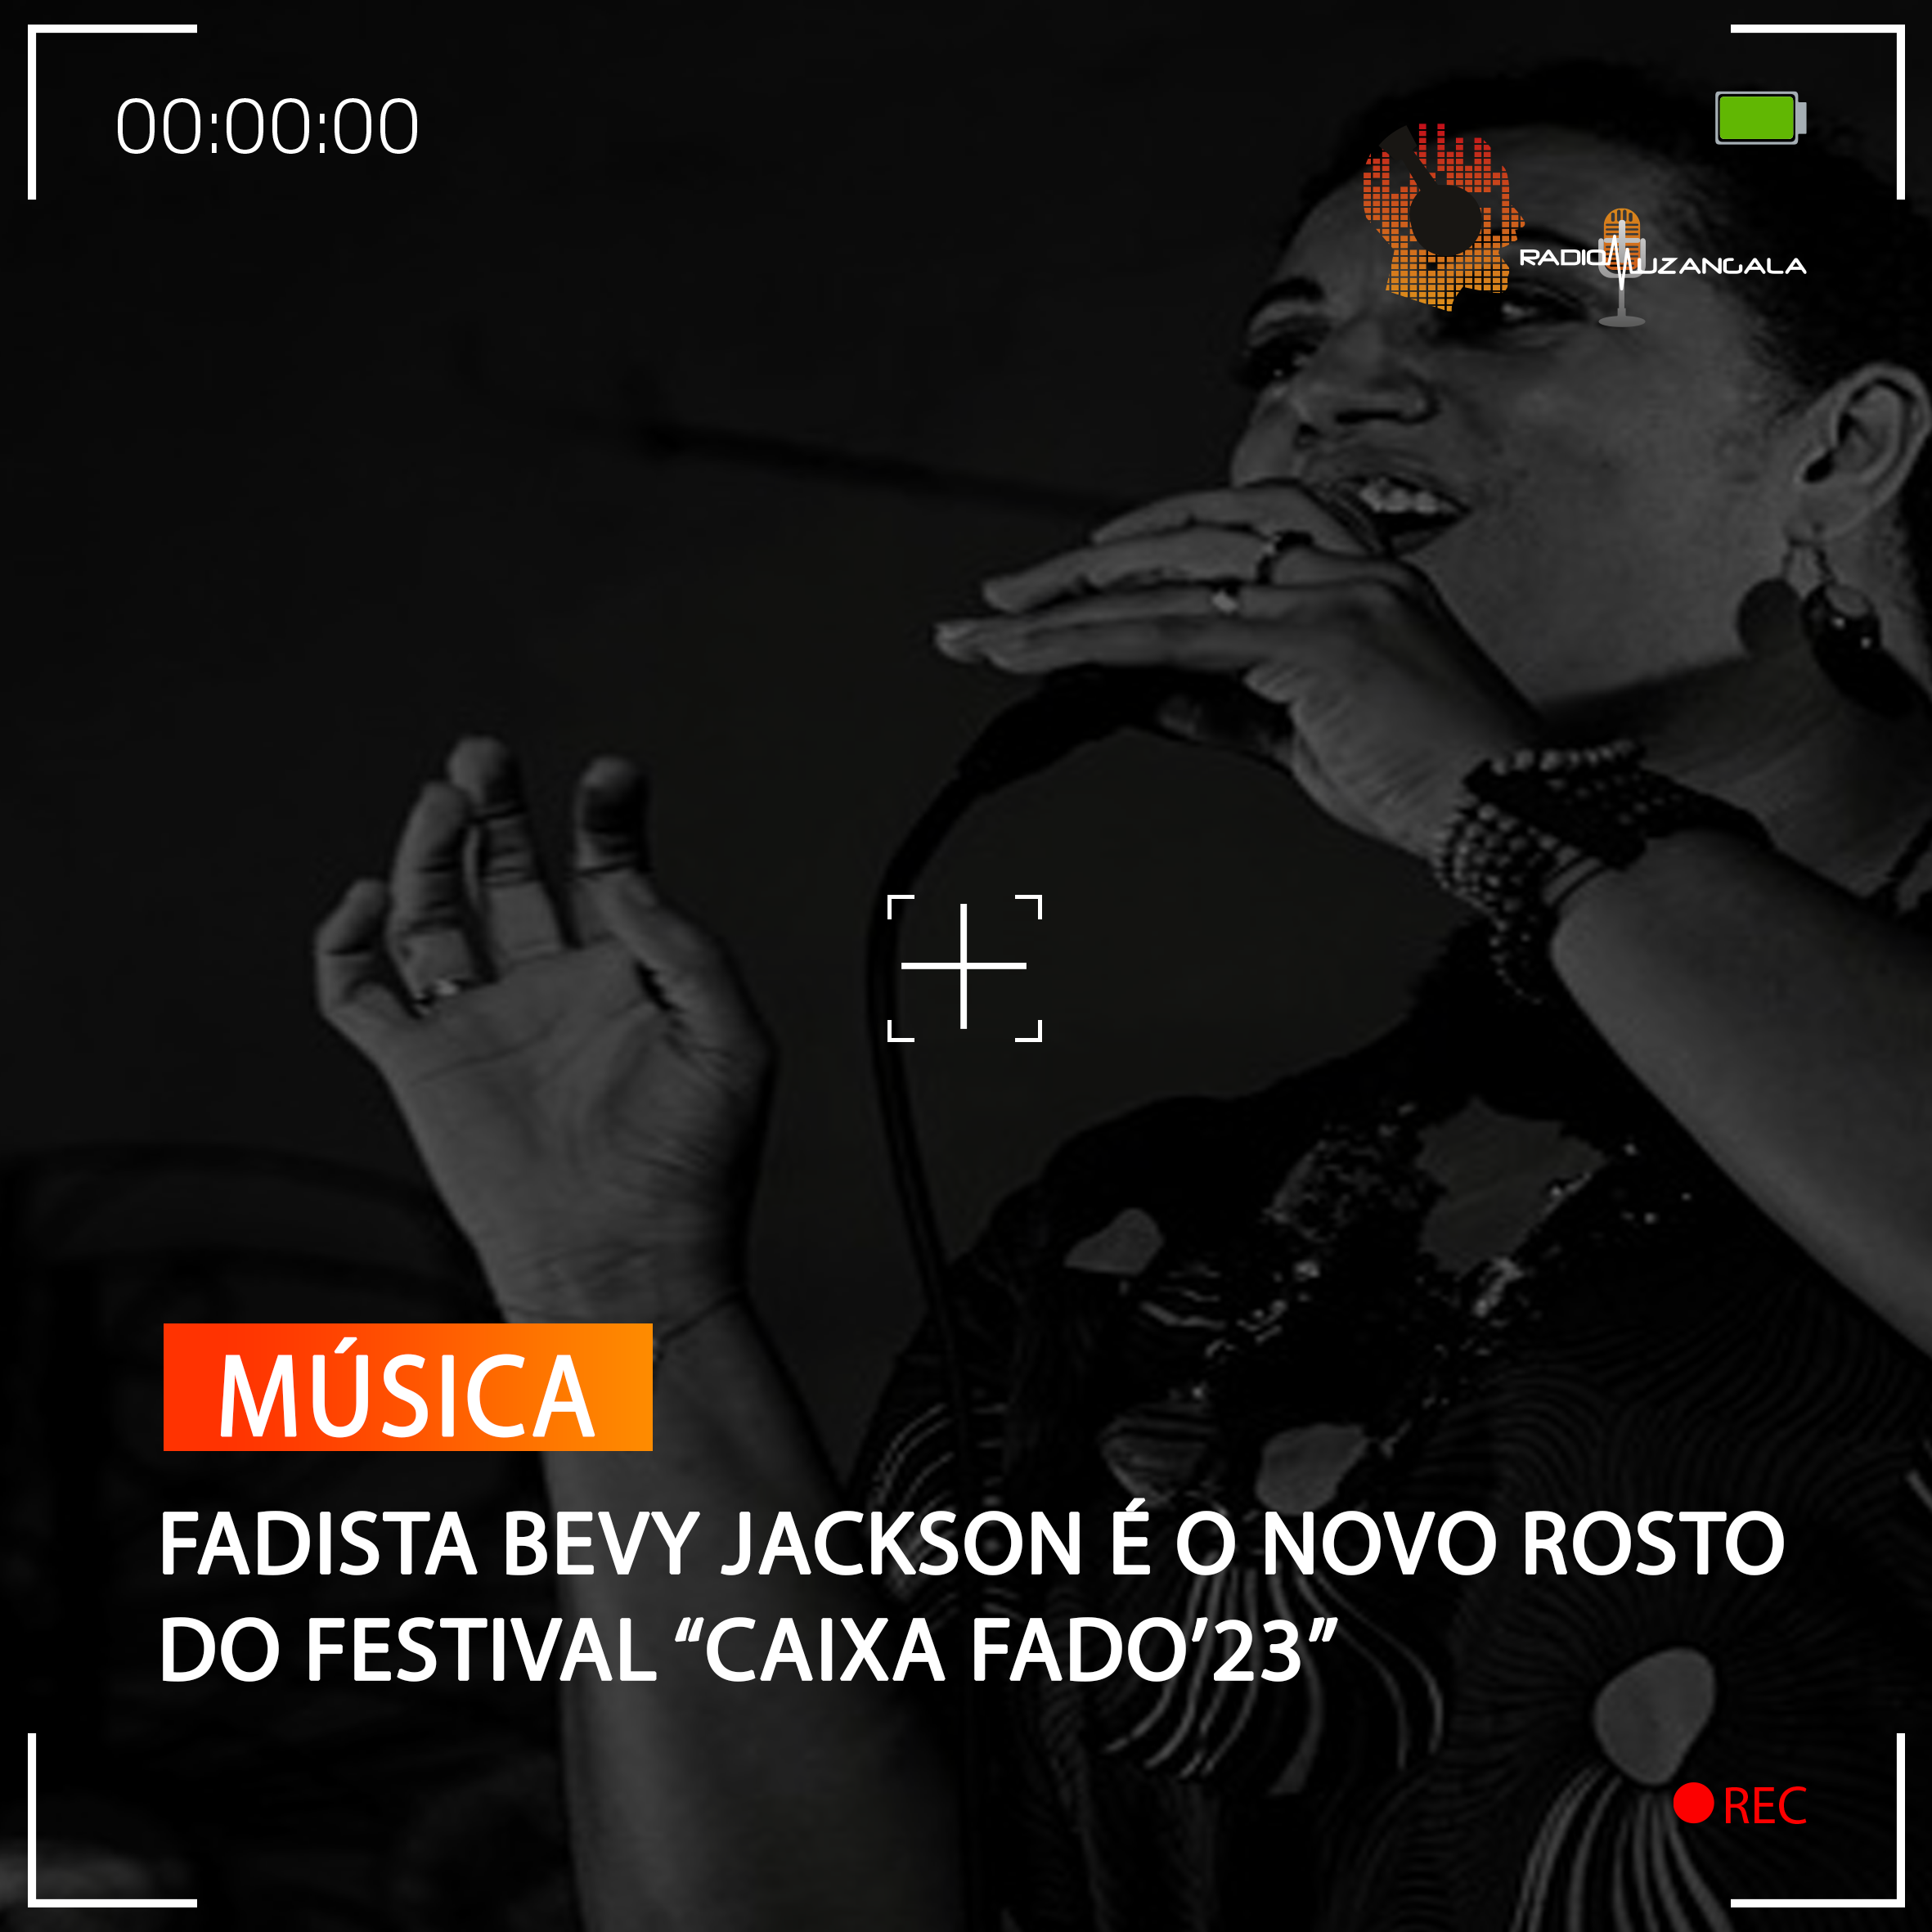  FADISTA BEVY JACKSON É O NOVO ROSTO DO FESTIVAL “CAIXA FADO’23”